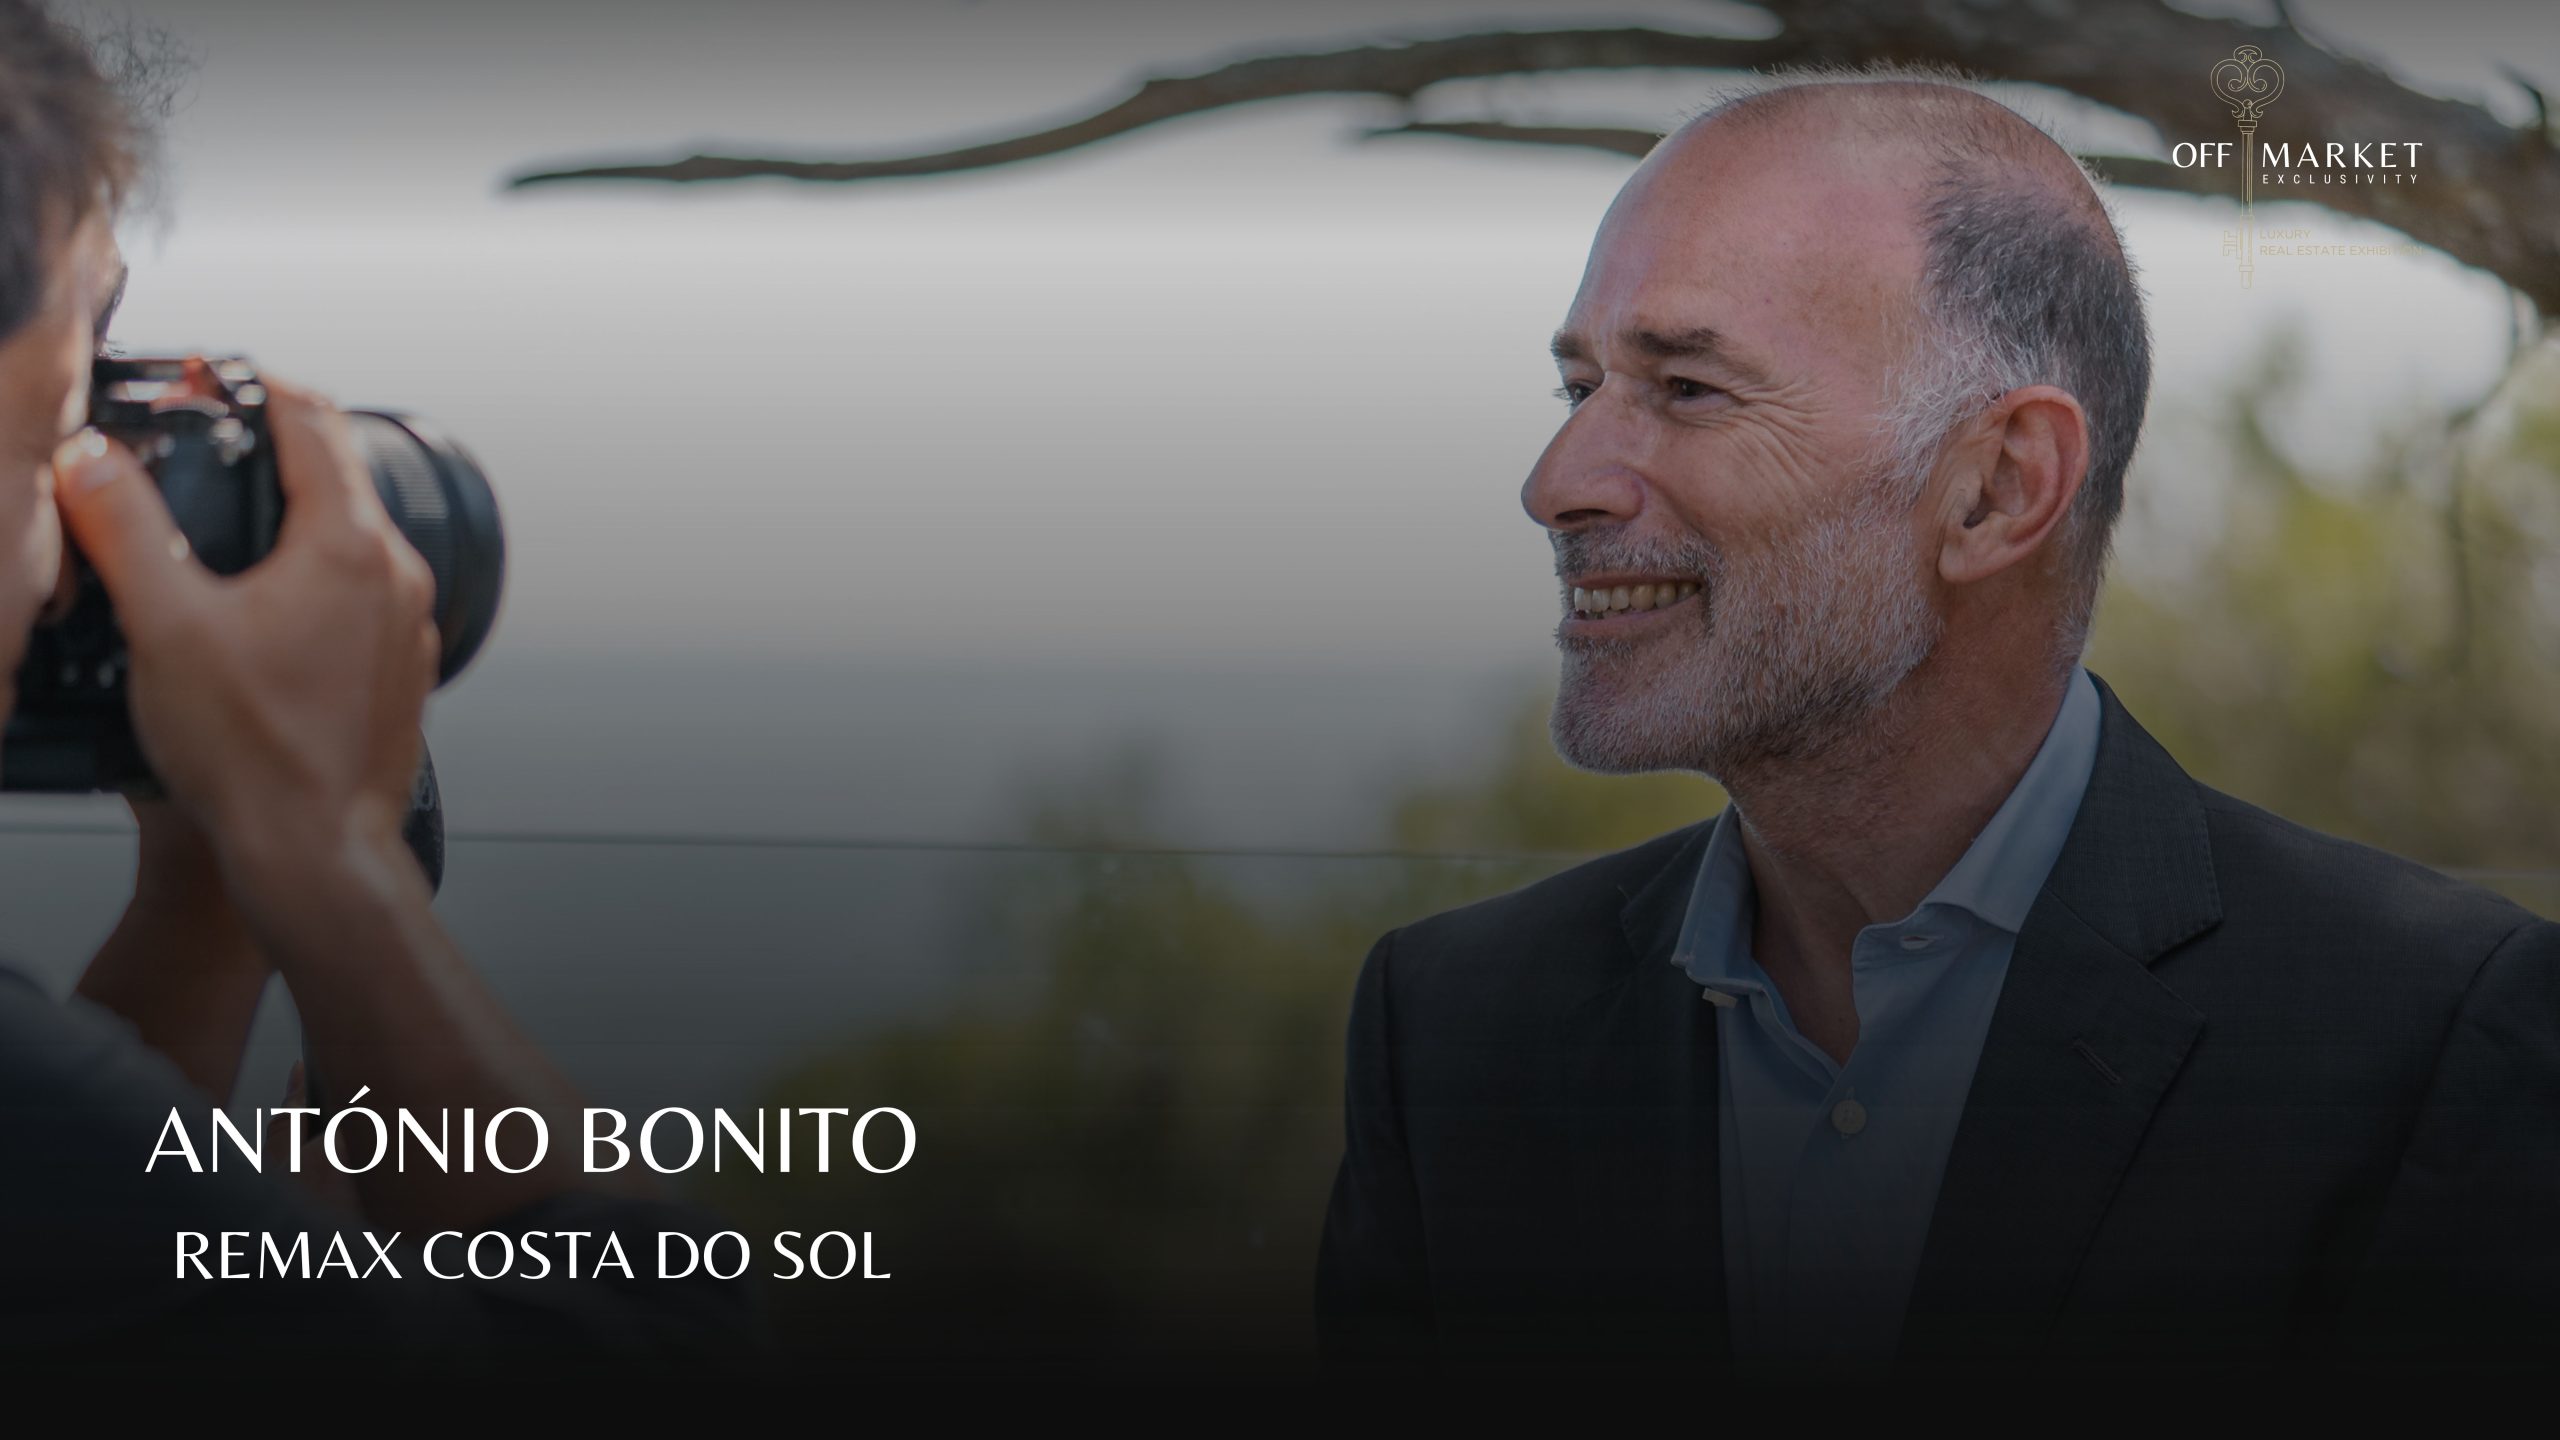 Off Market 2023 – António Bonito